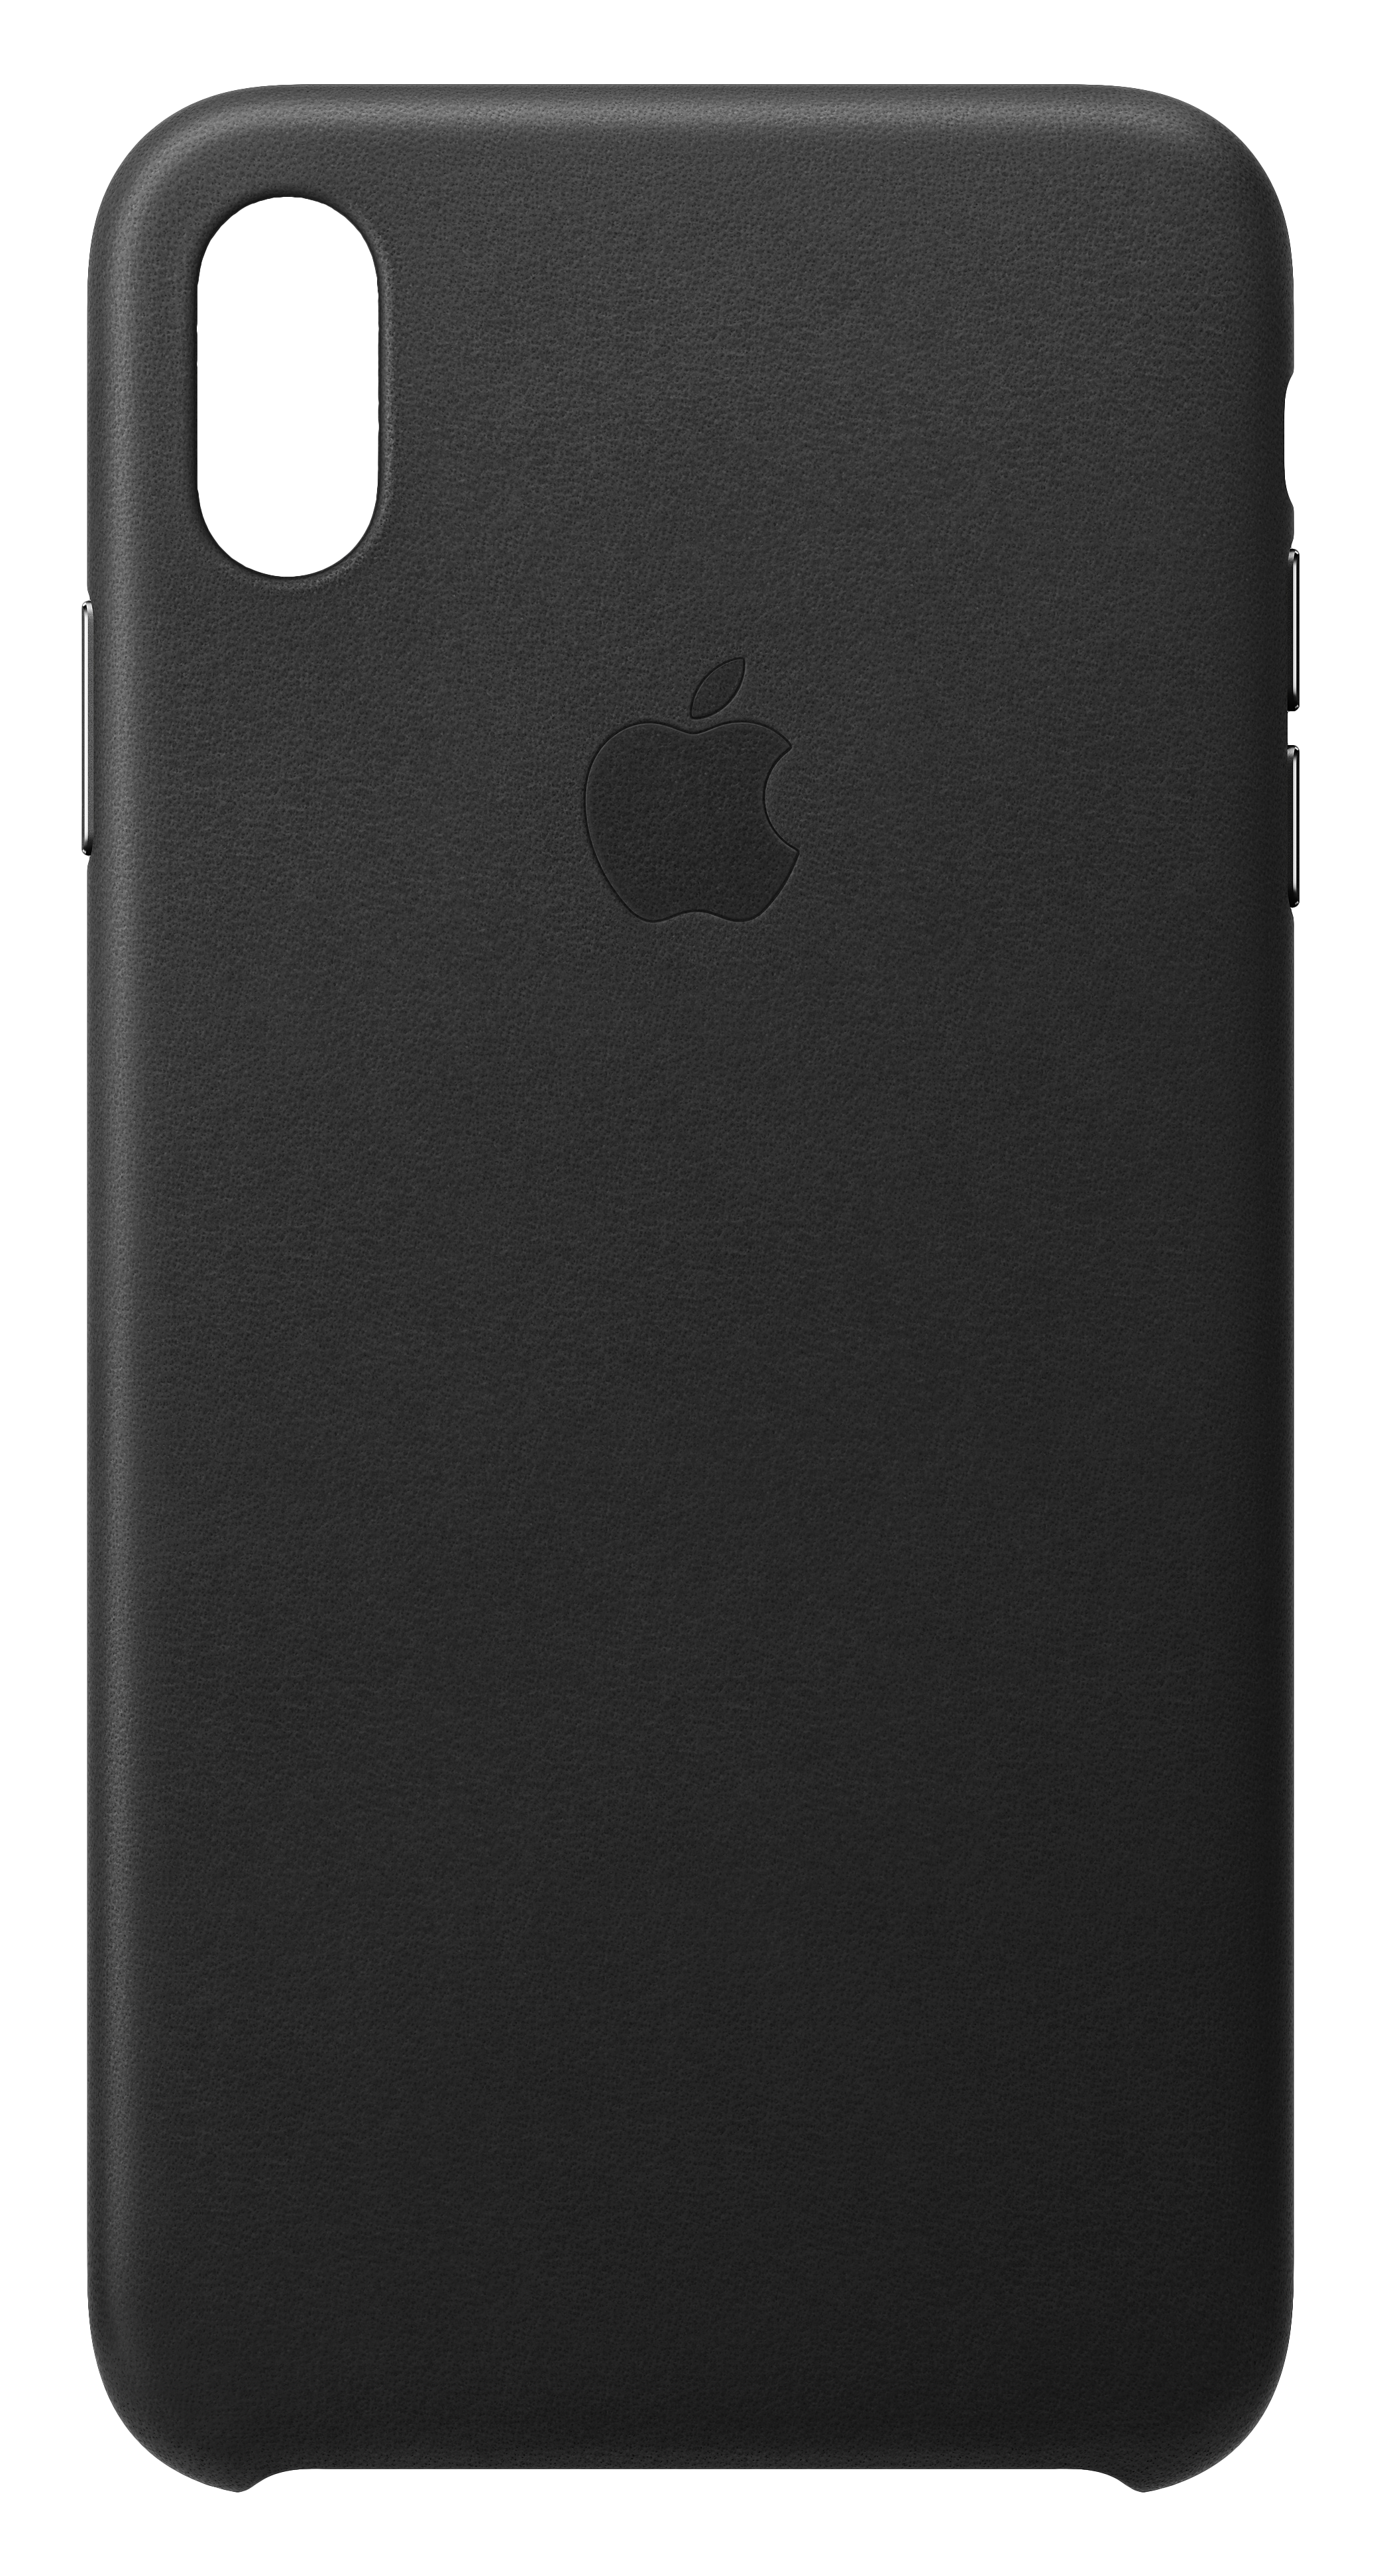 Apple MRWT2ZM/A zwart / iPhone XS Max